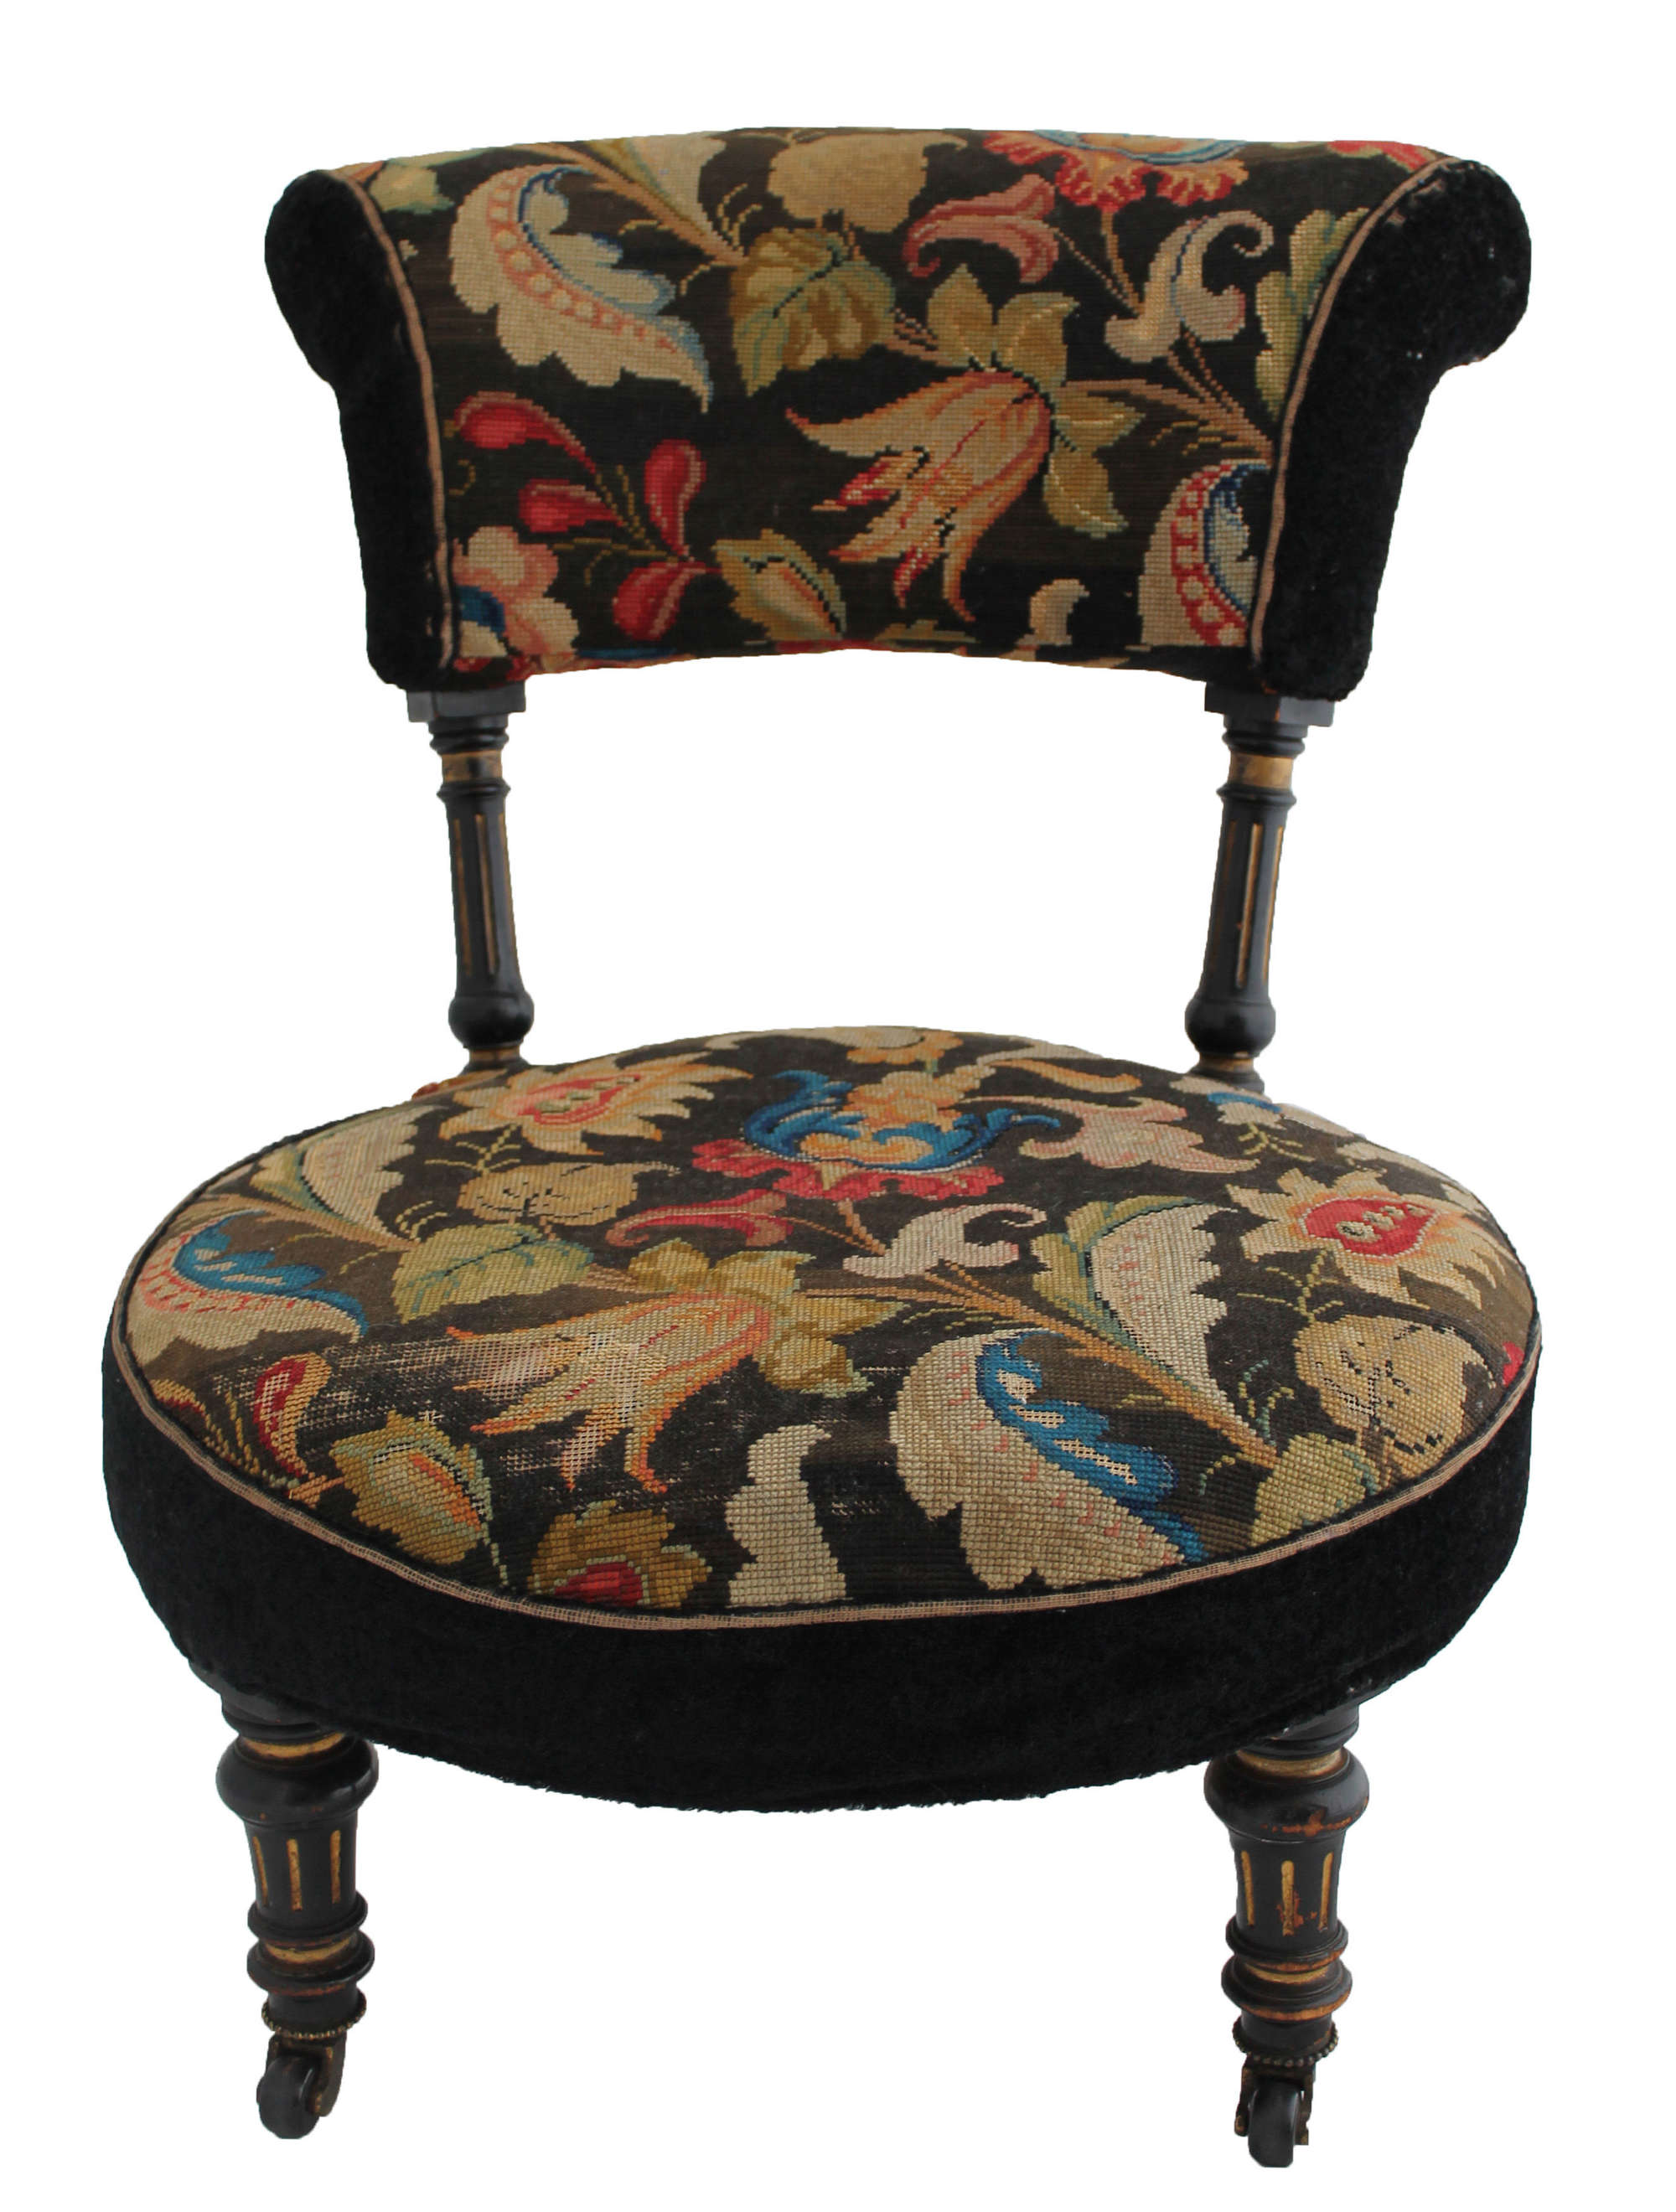 Victorian aesthetic period tub chair